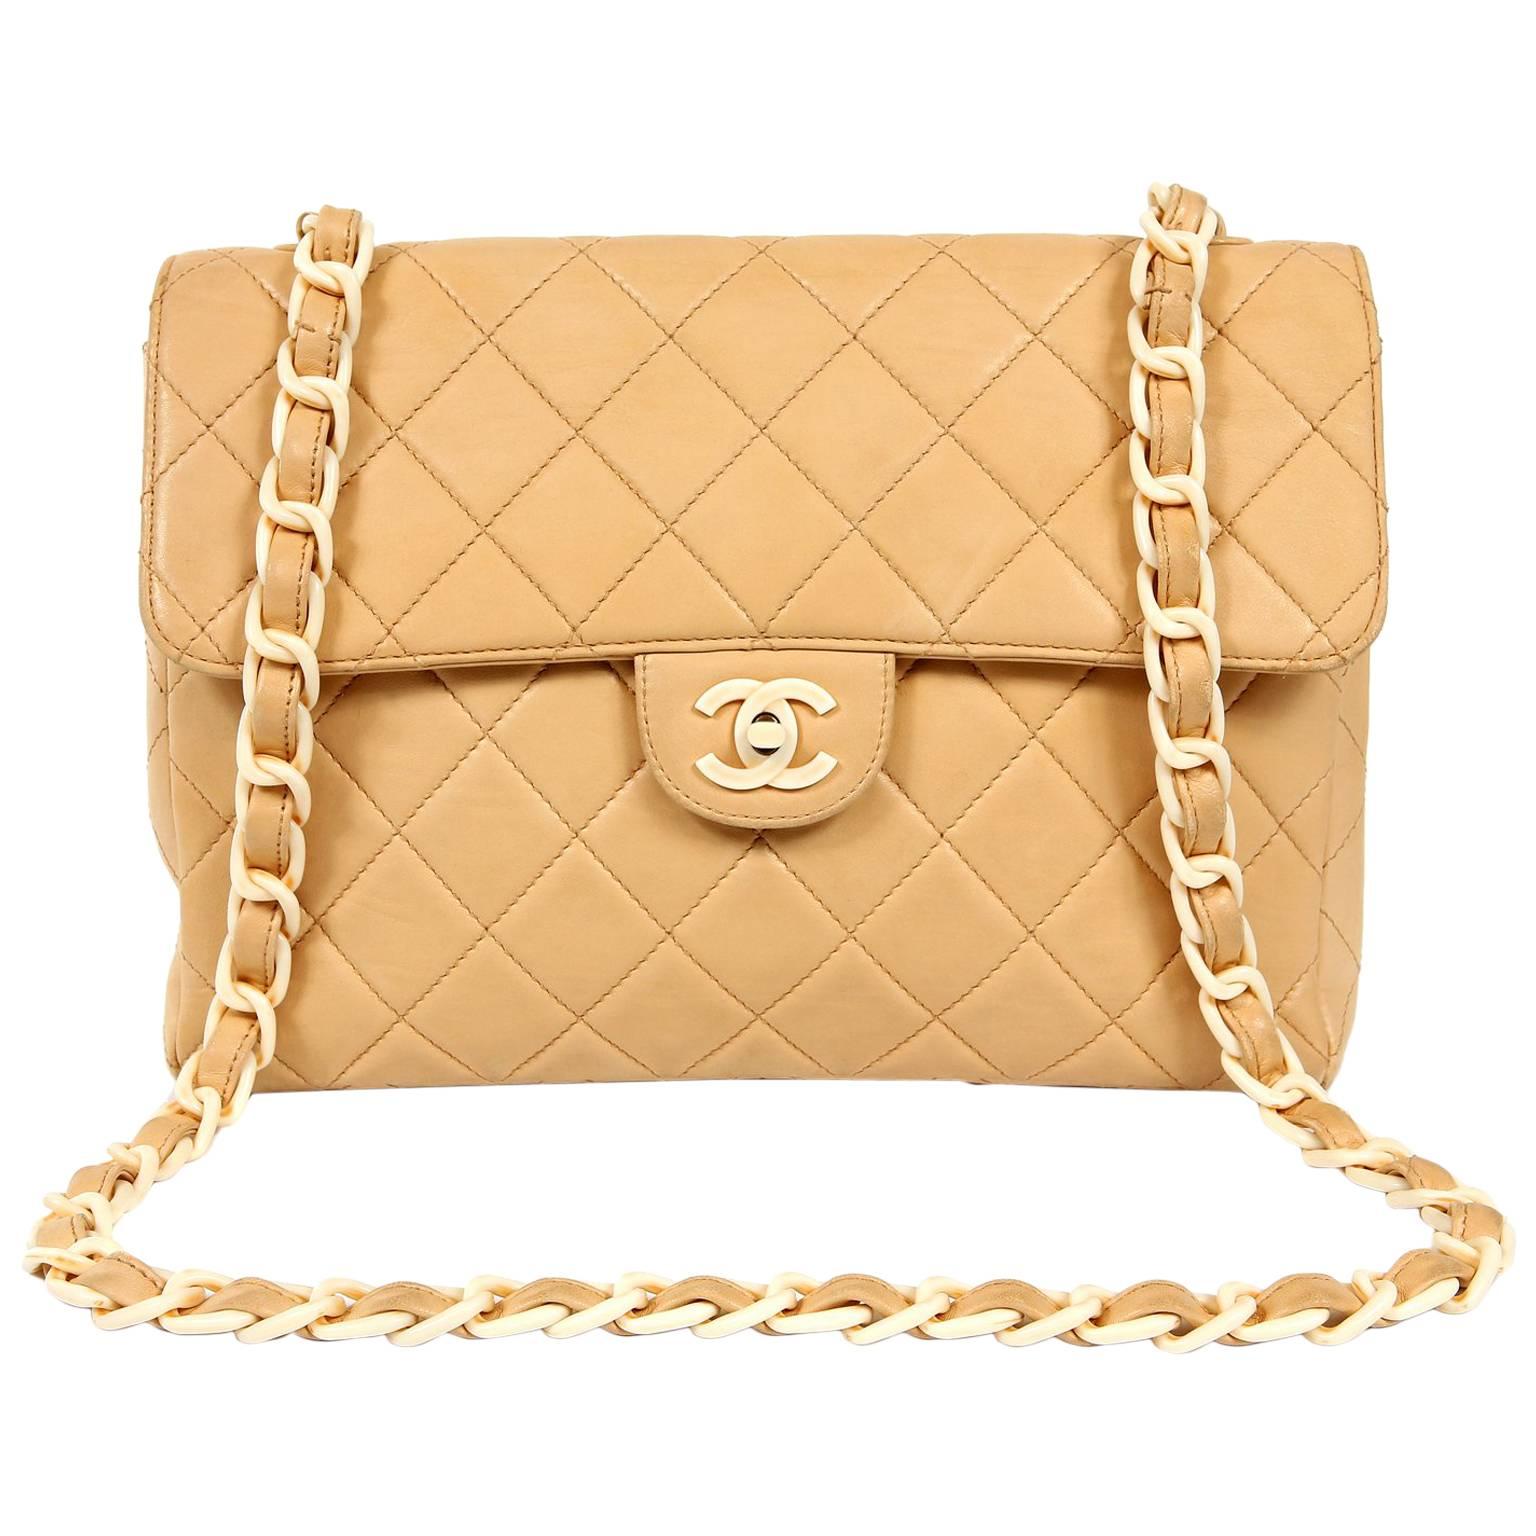 Chanel Beige Lambskin and Bakelite Vintage Classic Flap Bag